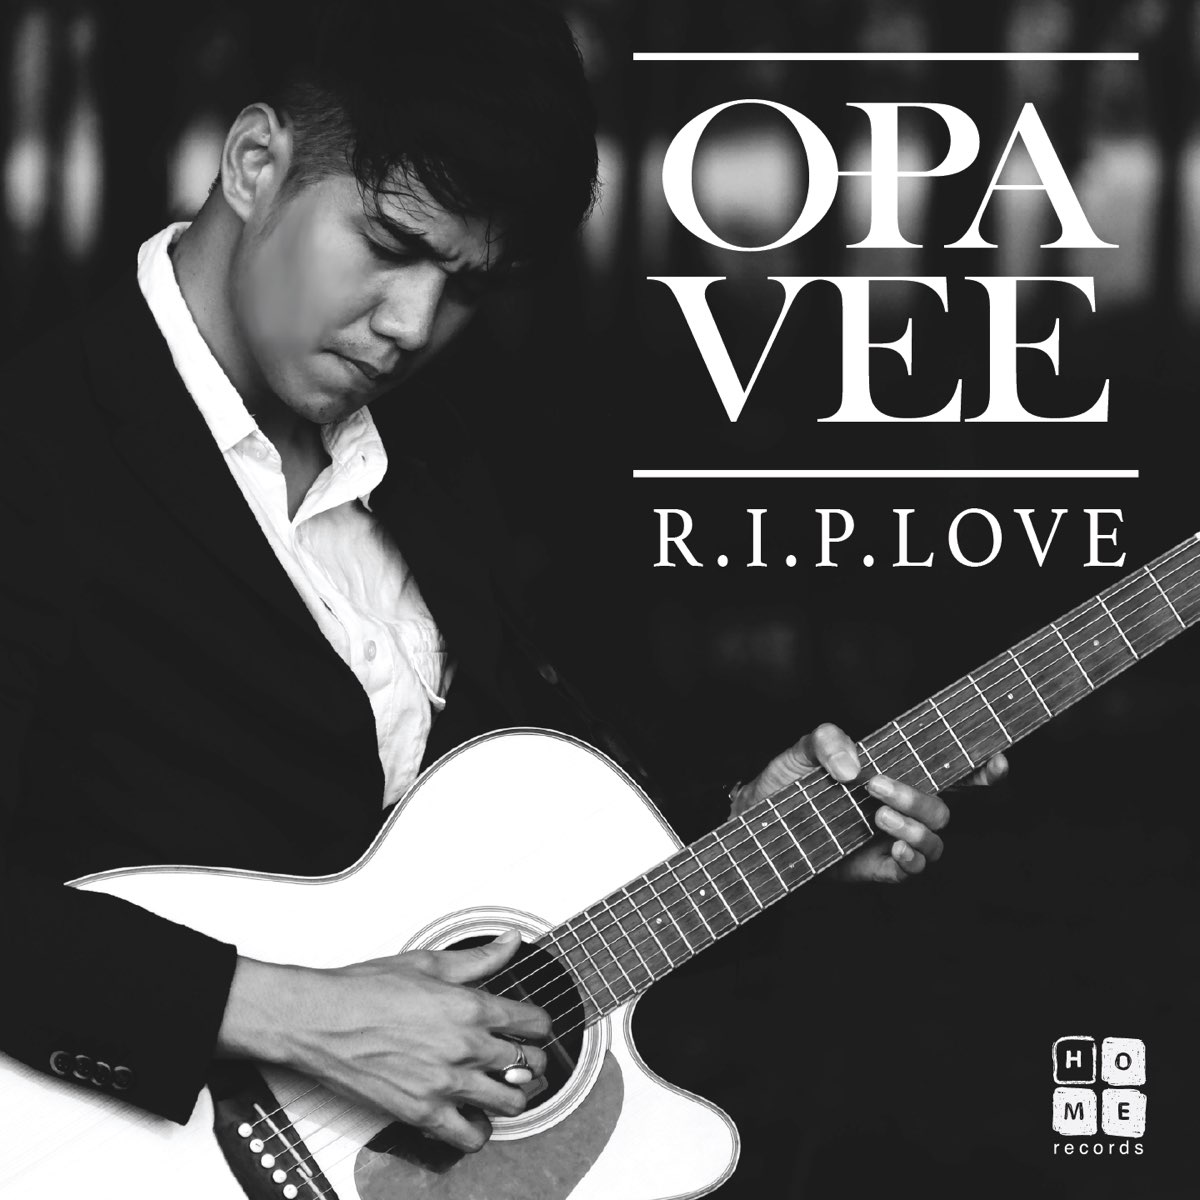 O-Pavee - R.I.P. (Love)